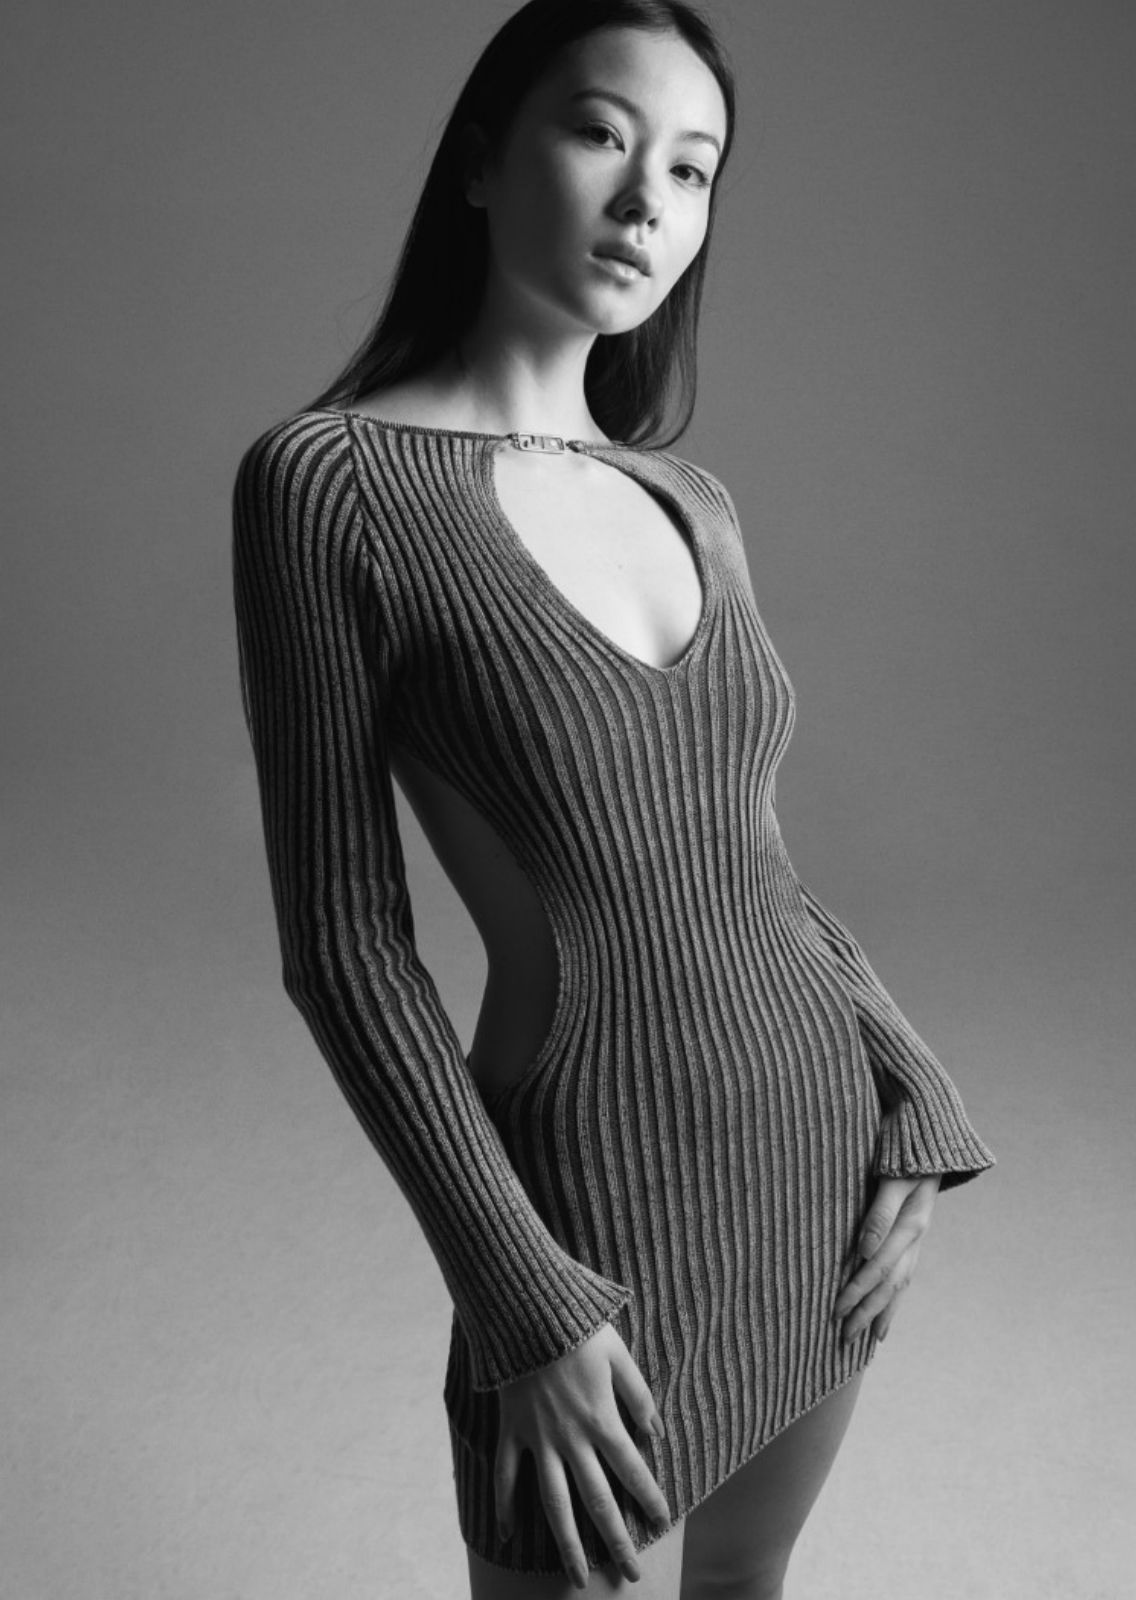 KALEY KAM. Carmen Duran Model Agency.